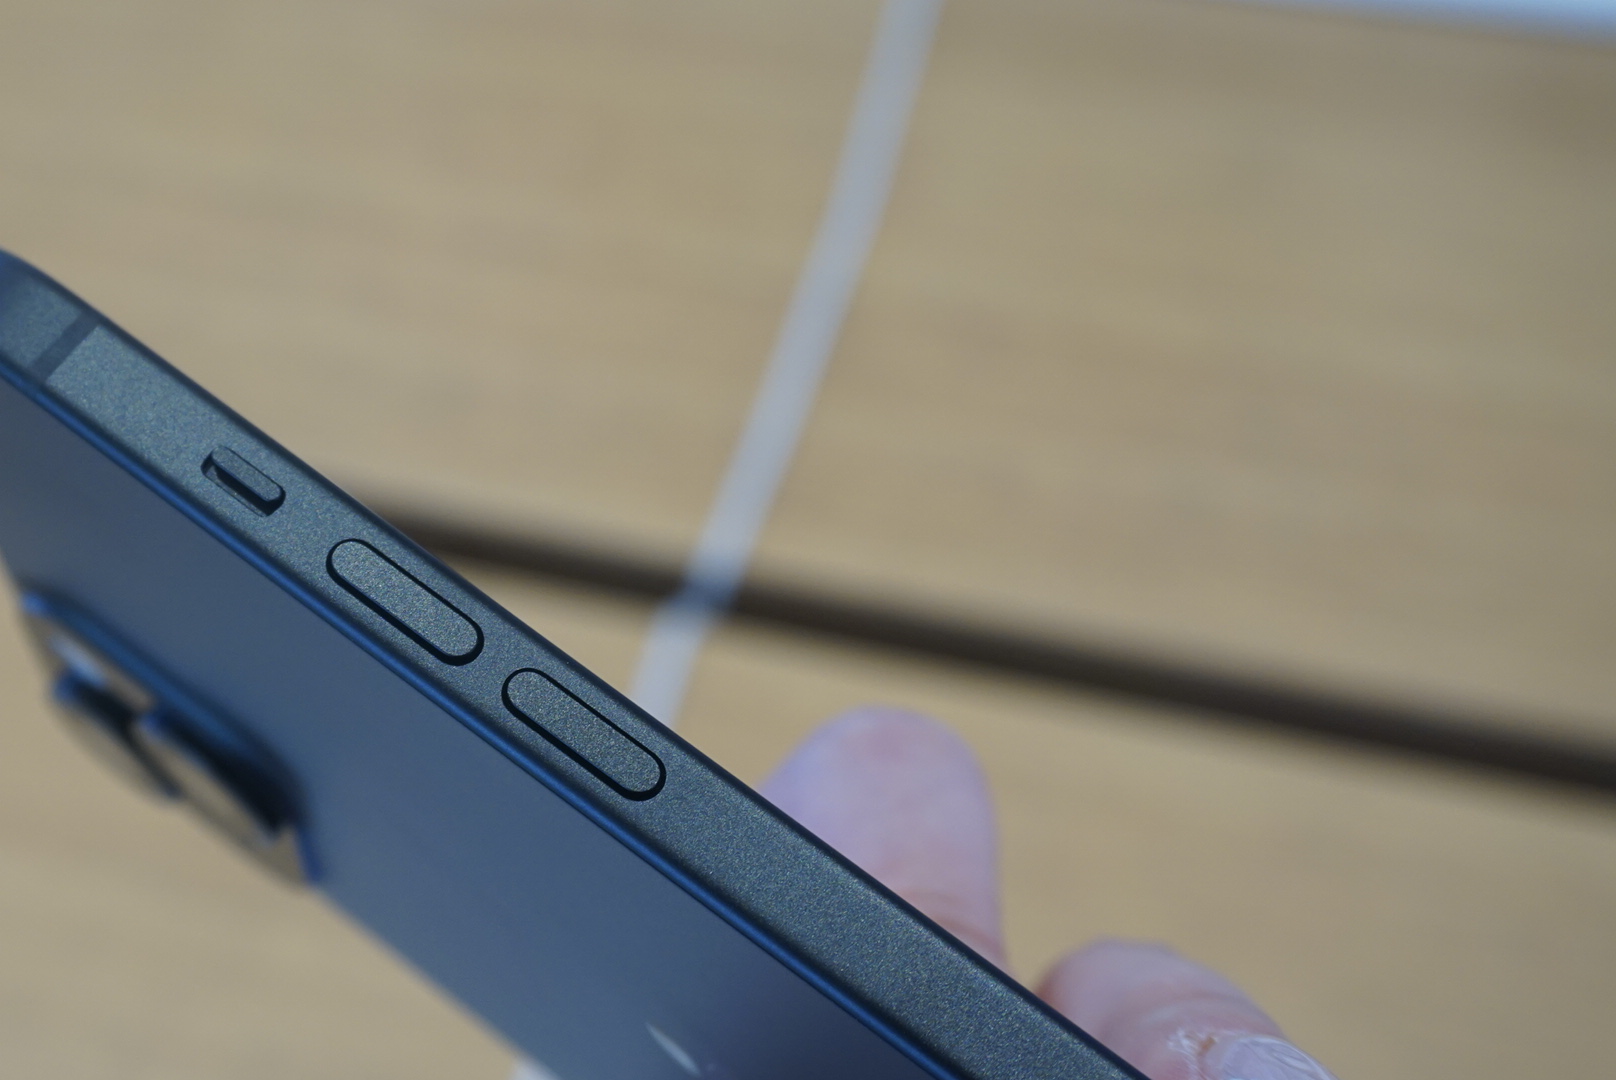  iPhone 15 整個機身包括側邊都是採用磨砂霧面材質，相較起 iPhone 14 的不鏽鋼鏡面材質摸起來觸感更細膩也比較不容易留指紋。